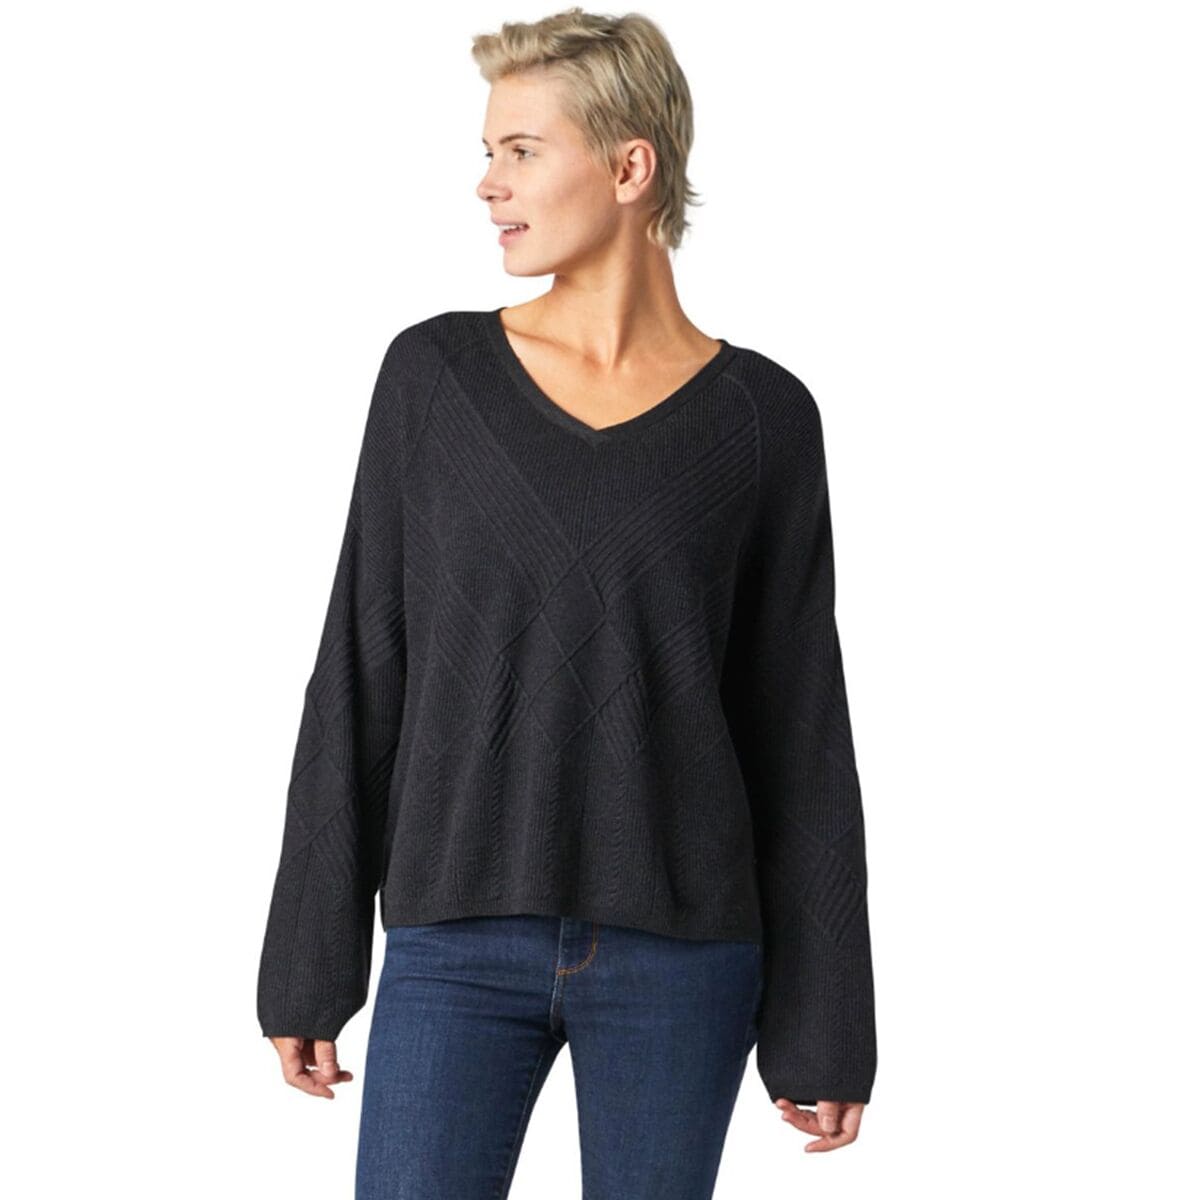 Smartwool Shadow Pine V-Neck Sweater - Women's